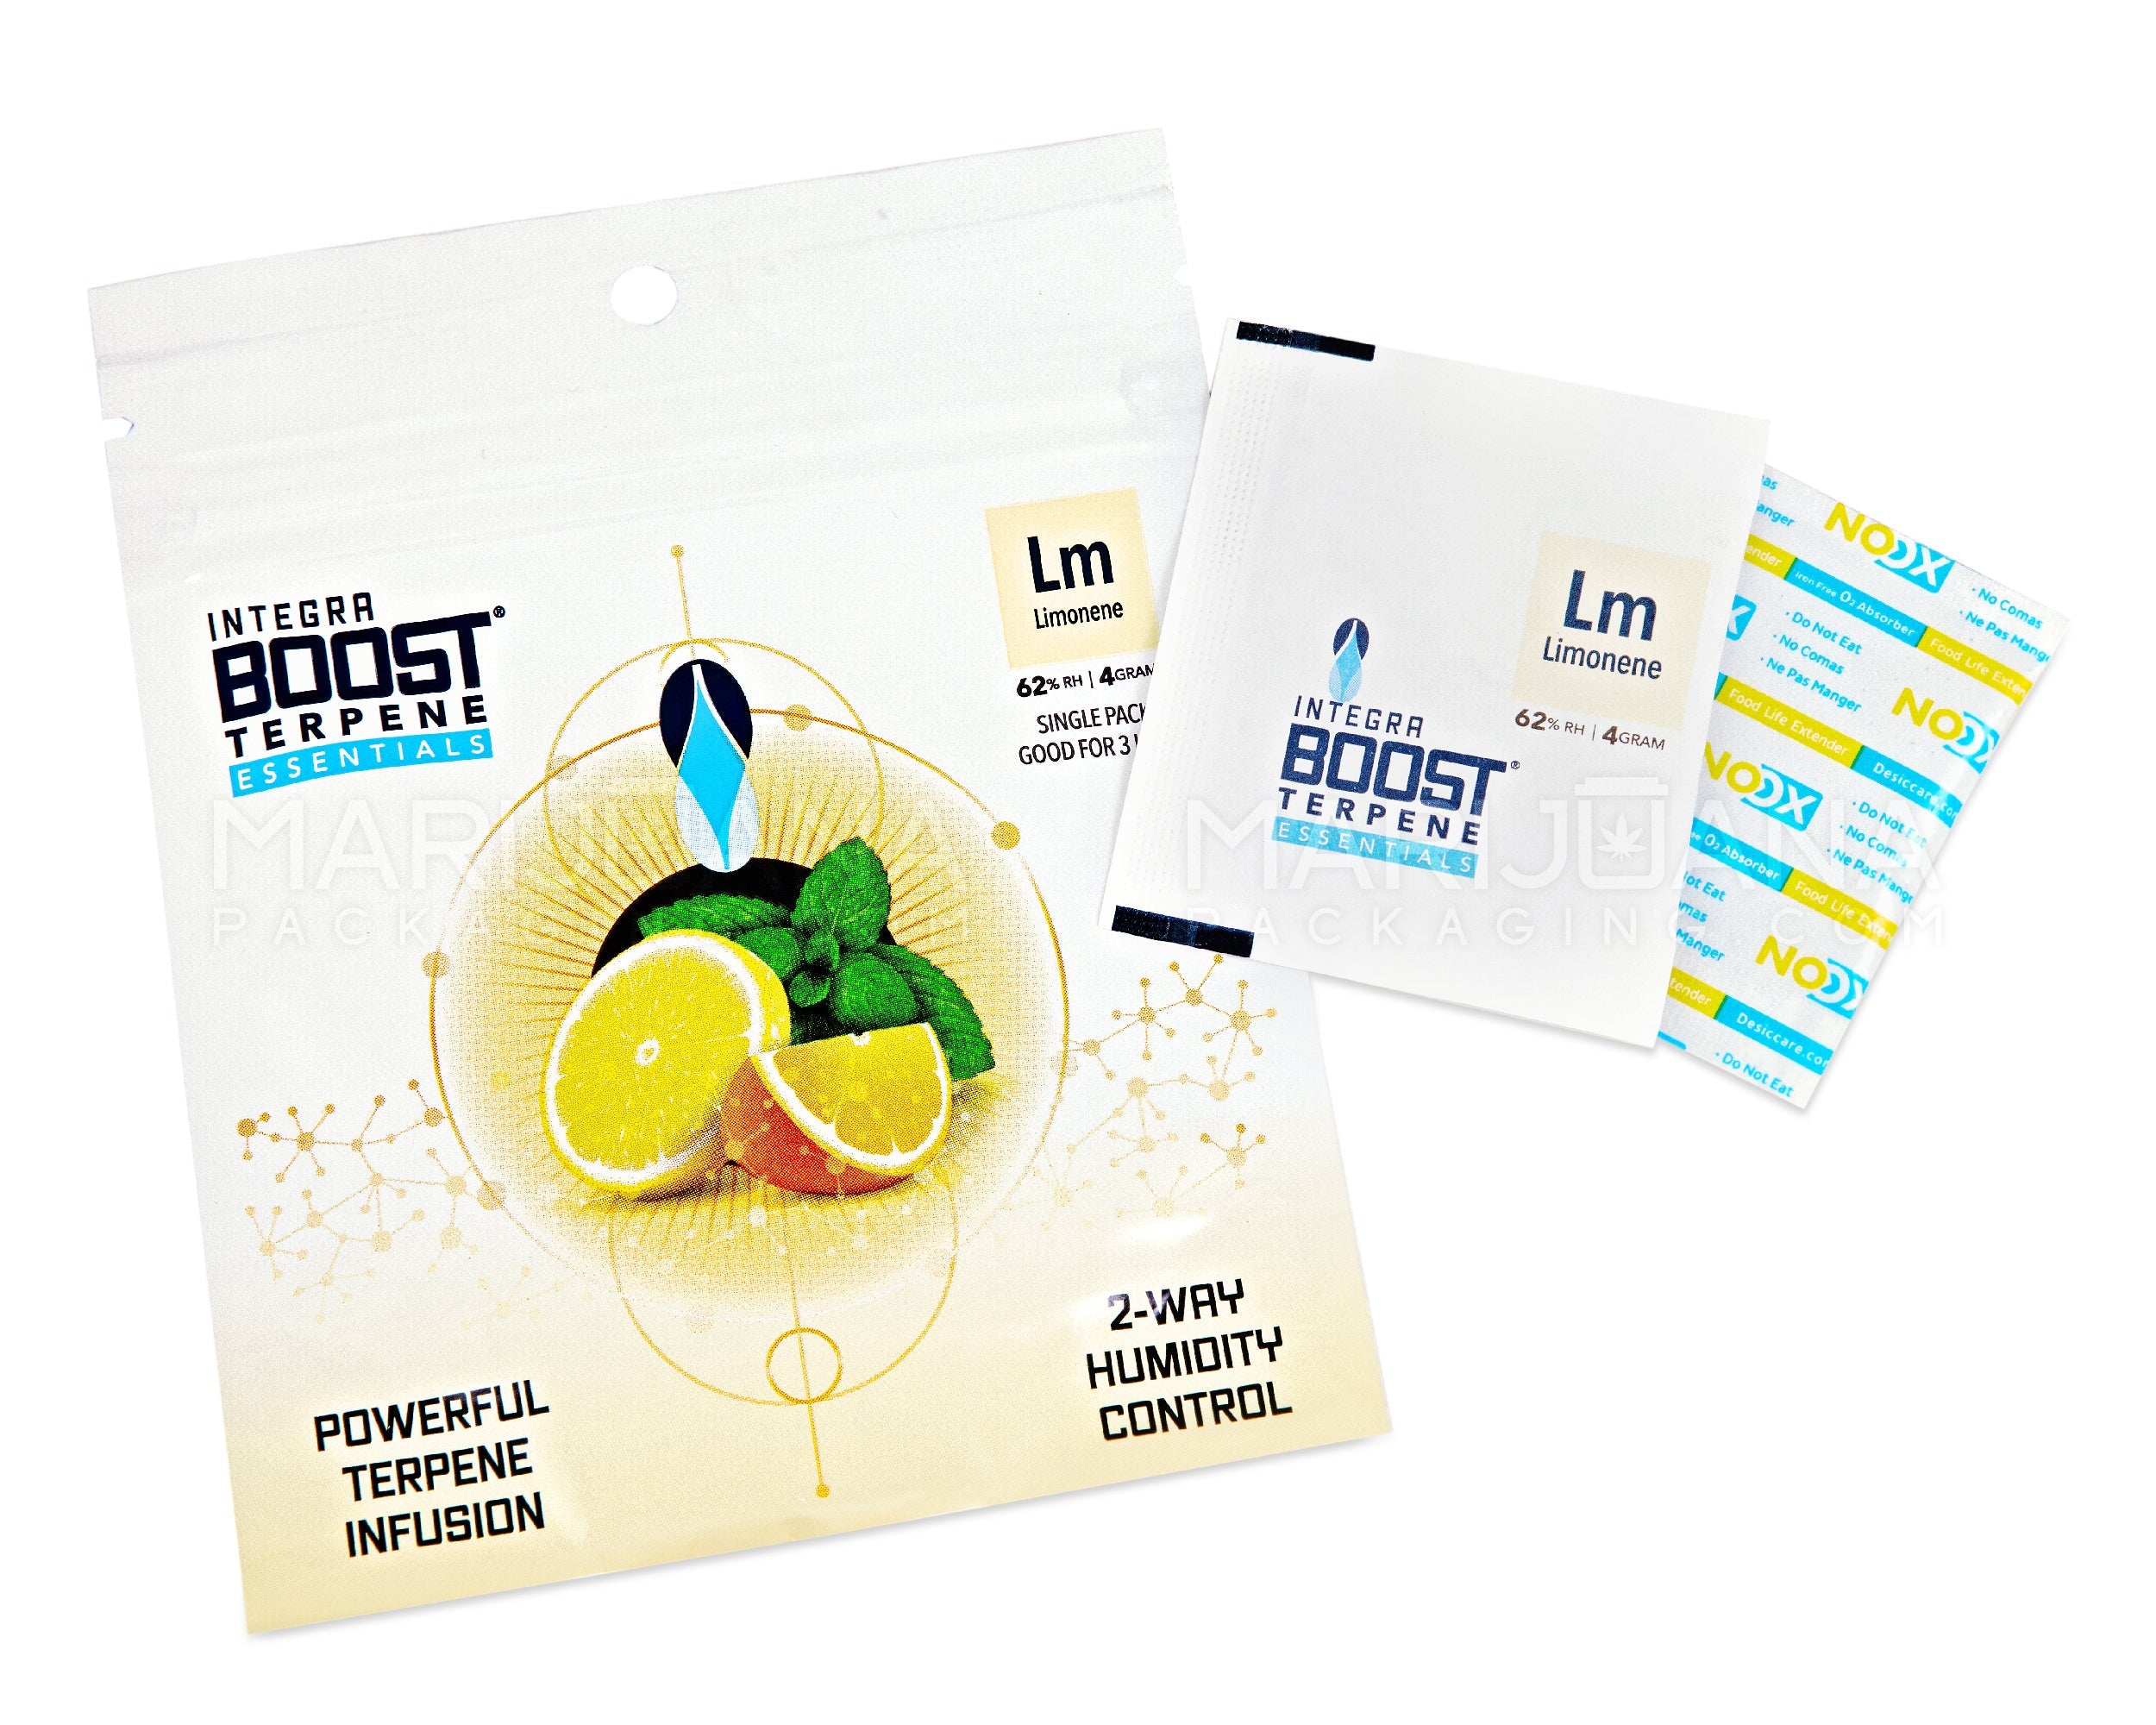 INTEGRA Boost Terpene Essentials Limonene Humidity Pack | 4 Grams - 62% | Sample - 5